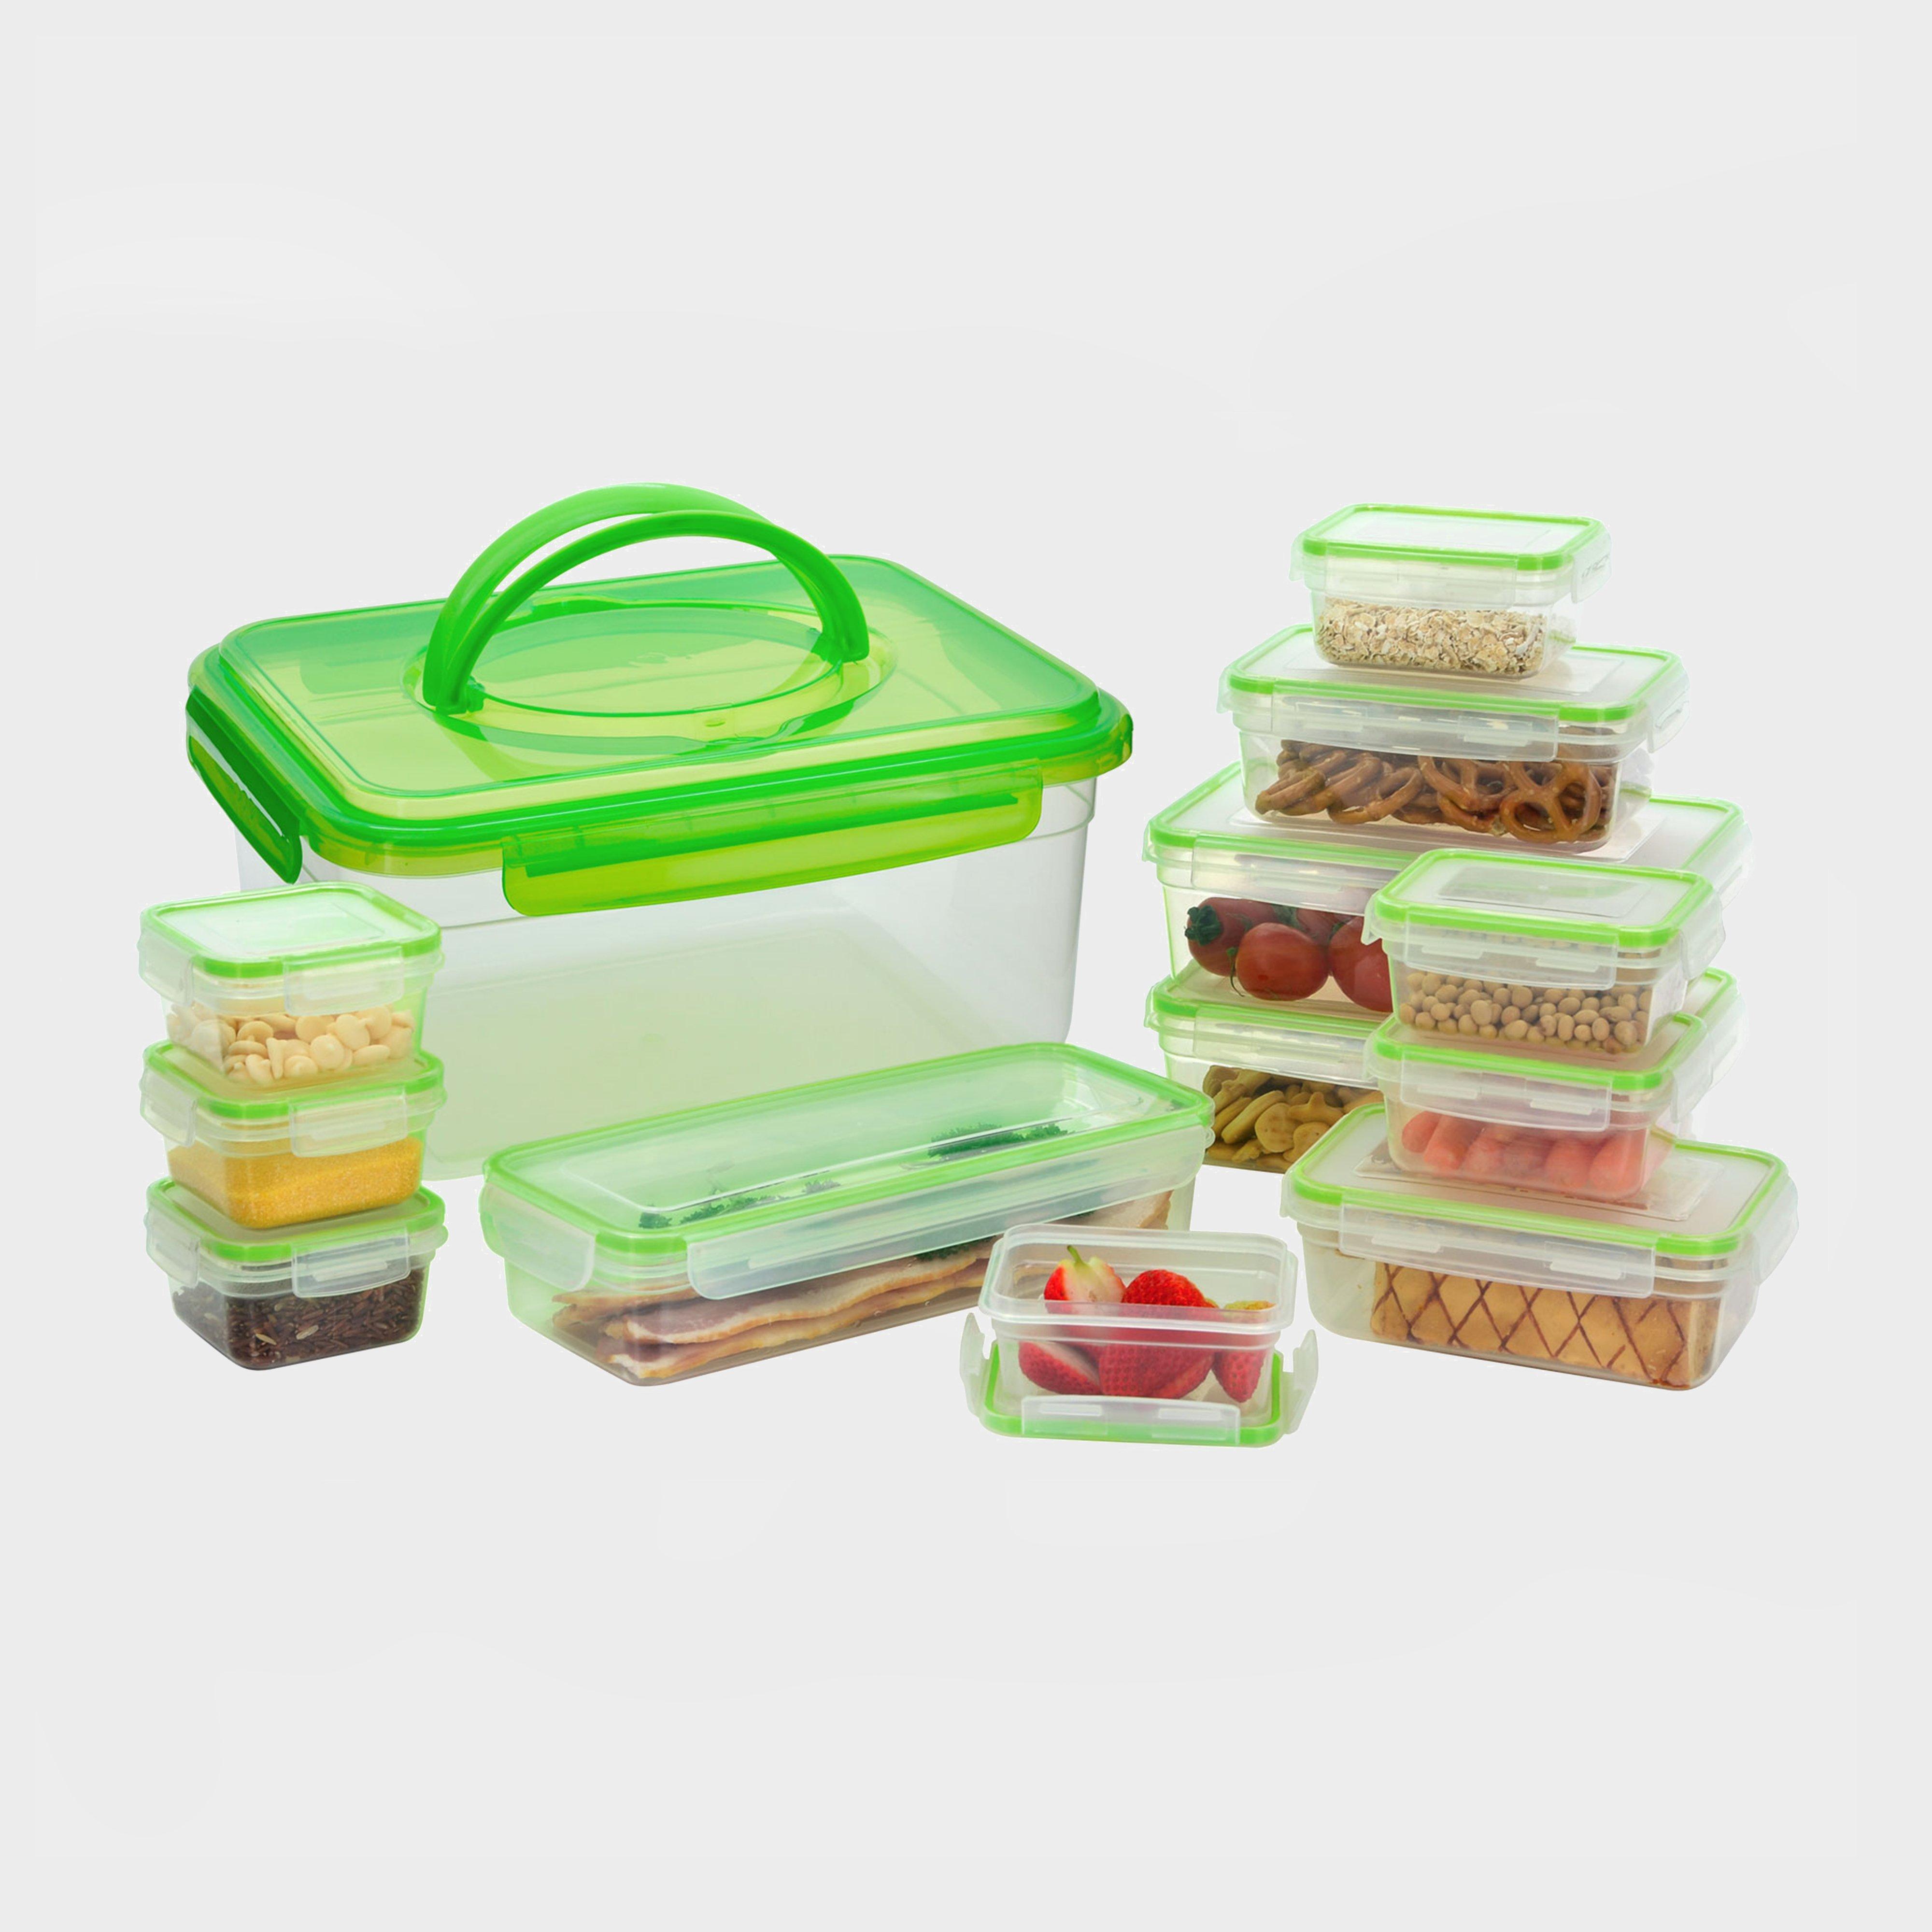 13 Piece Compact Food Storage Set, Green